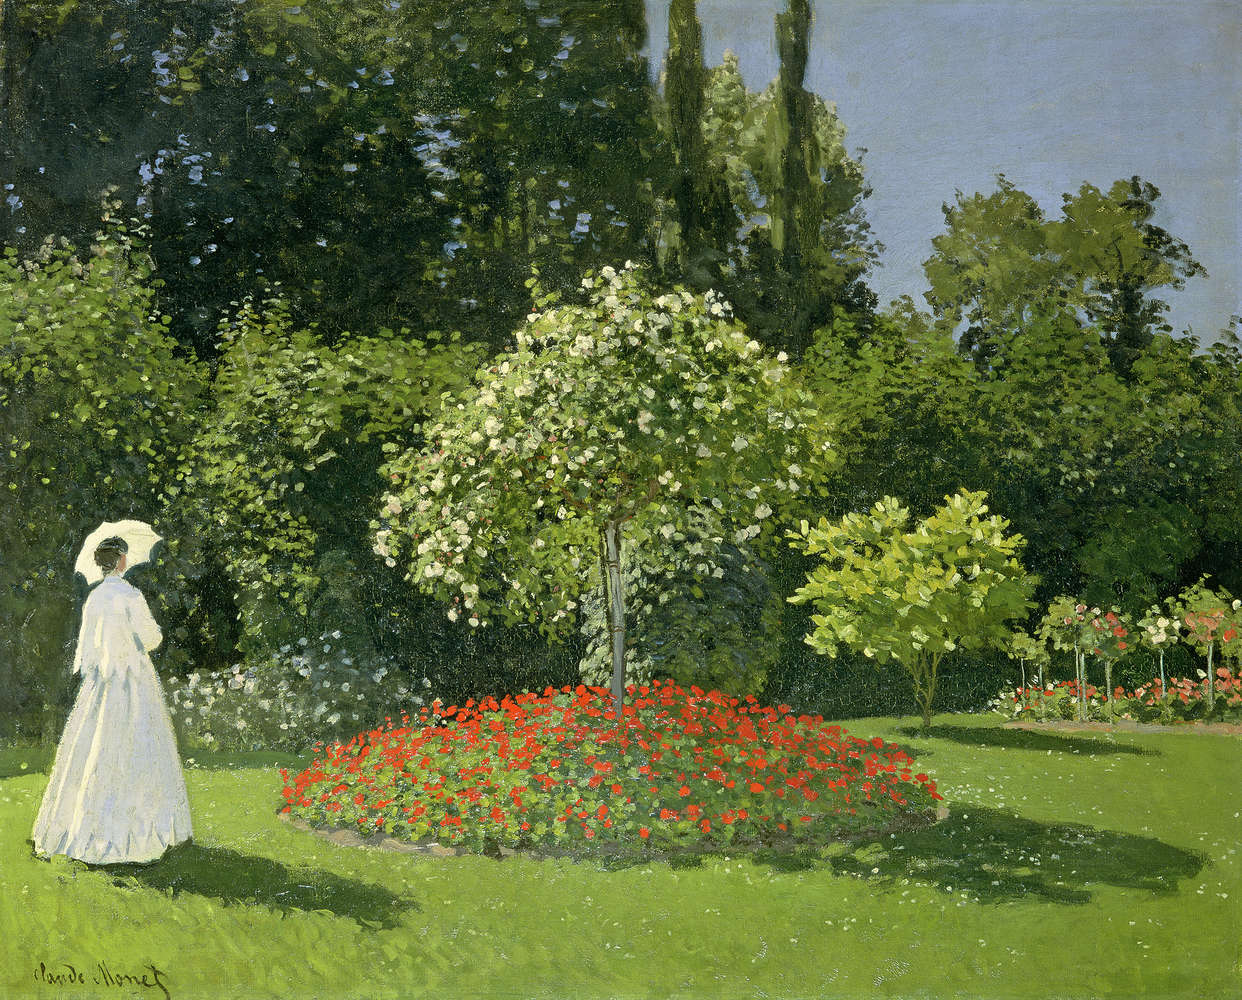             Fotomurali "Donna in giardino" di Claude Monet
        